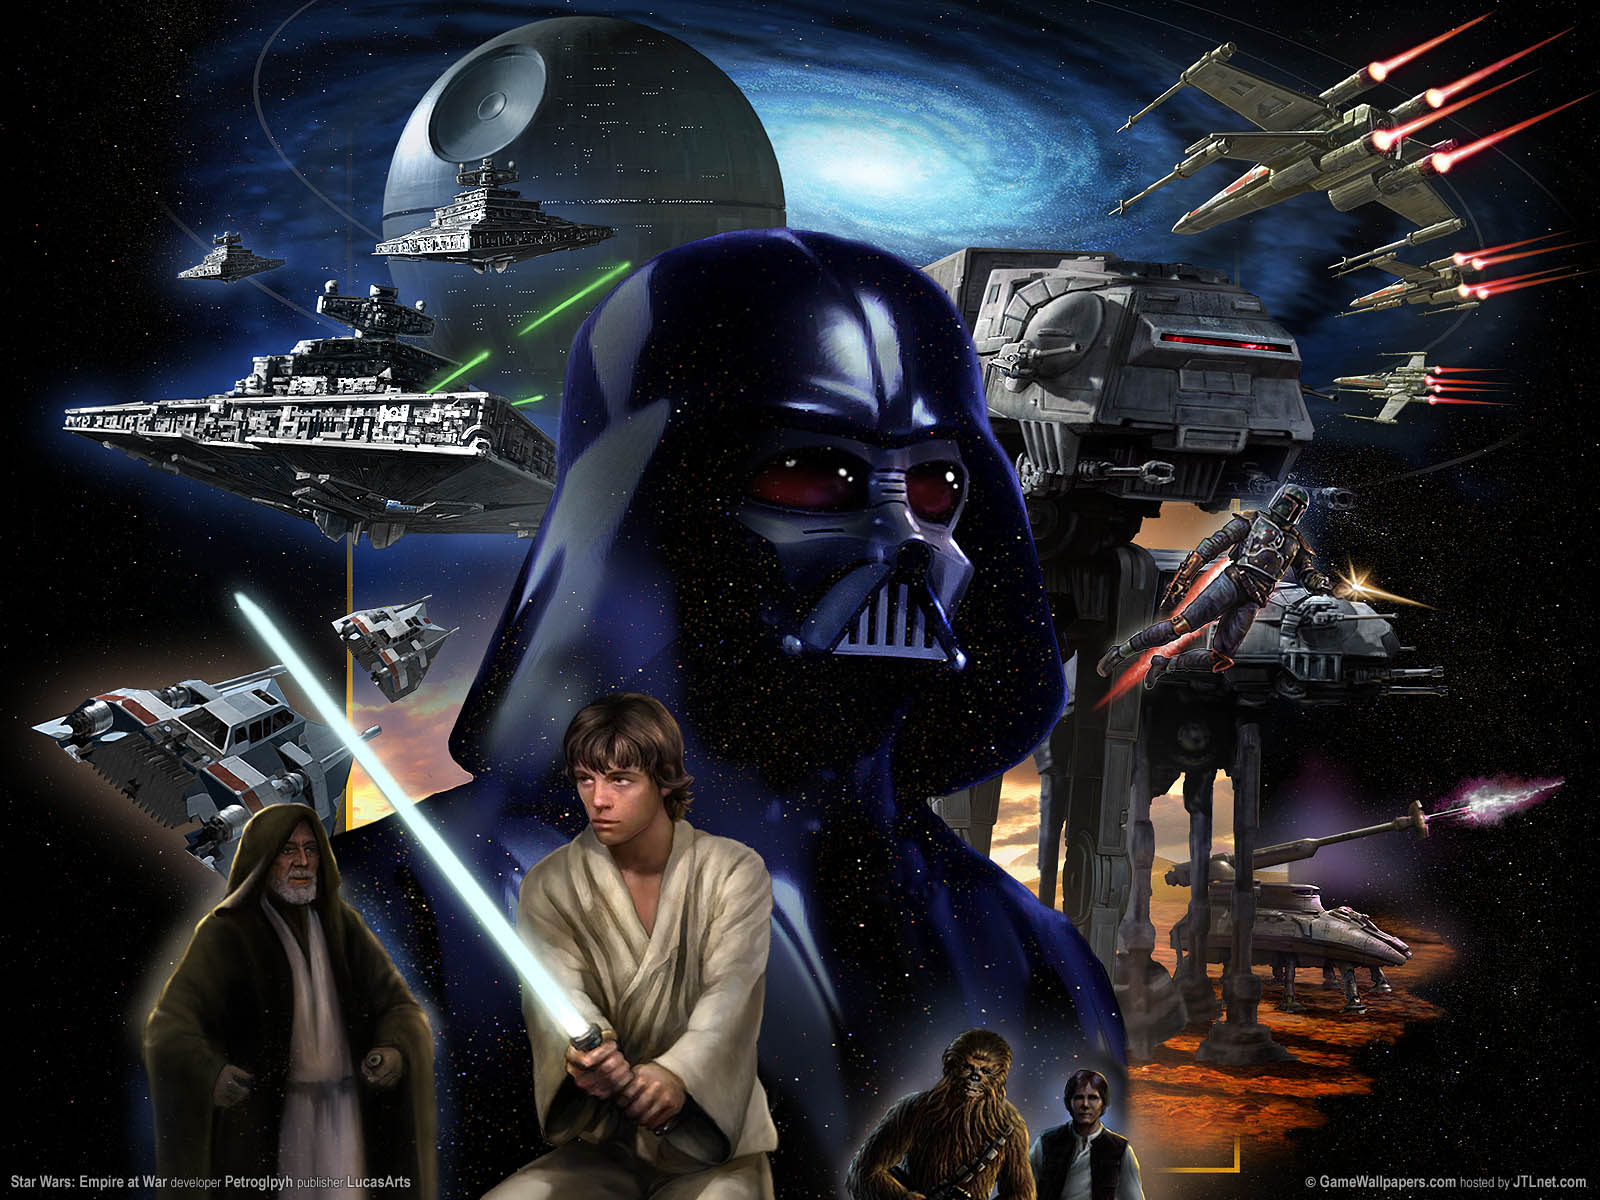 Fond ecran wallpaper Star Wars Empire At War   JeuxVideofr